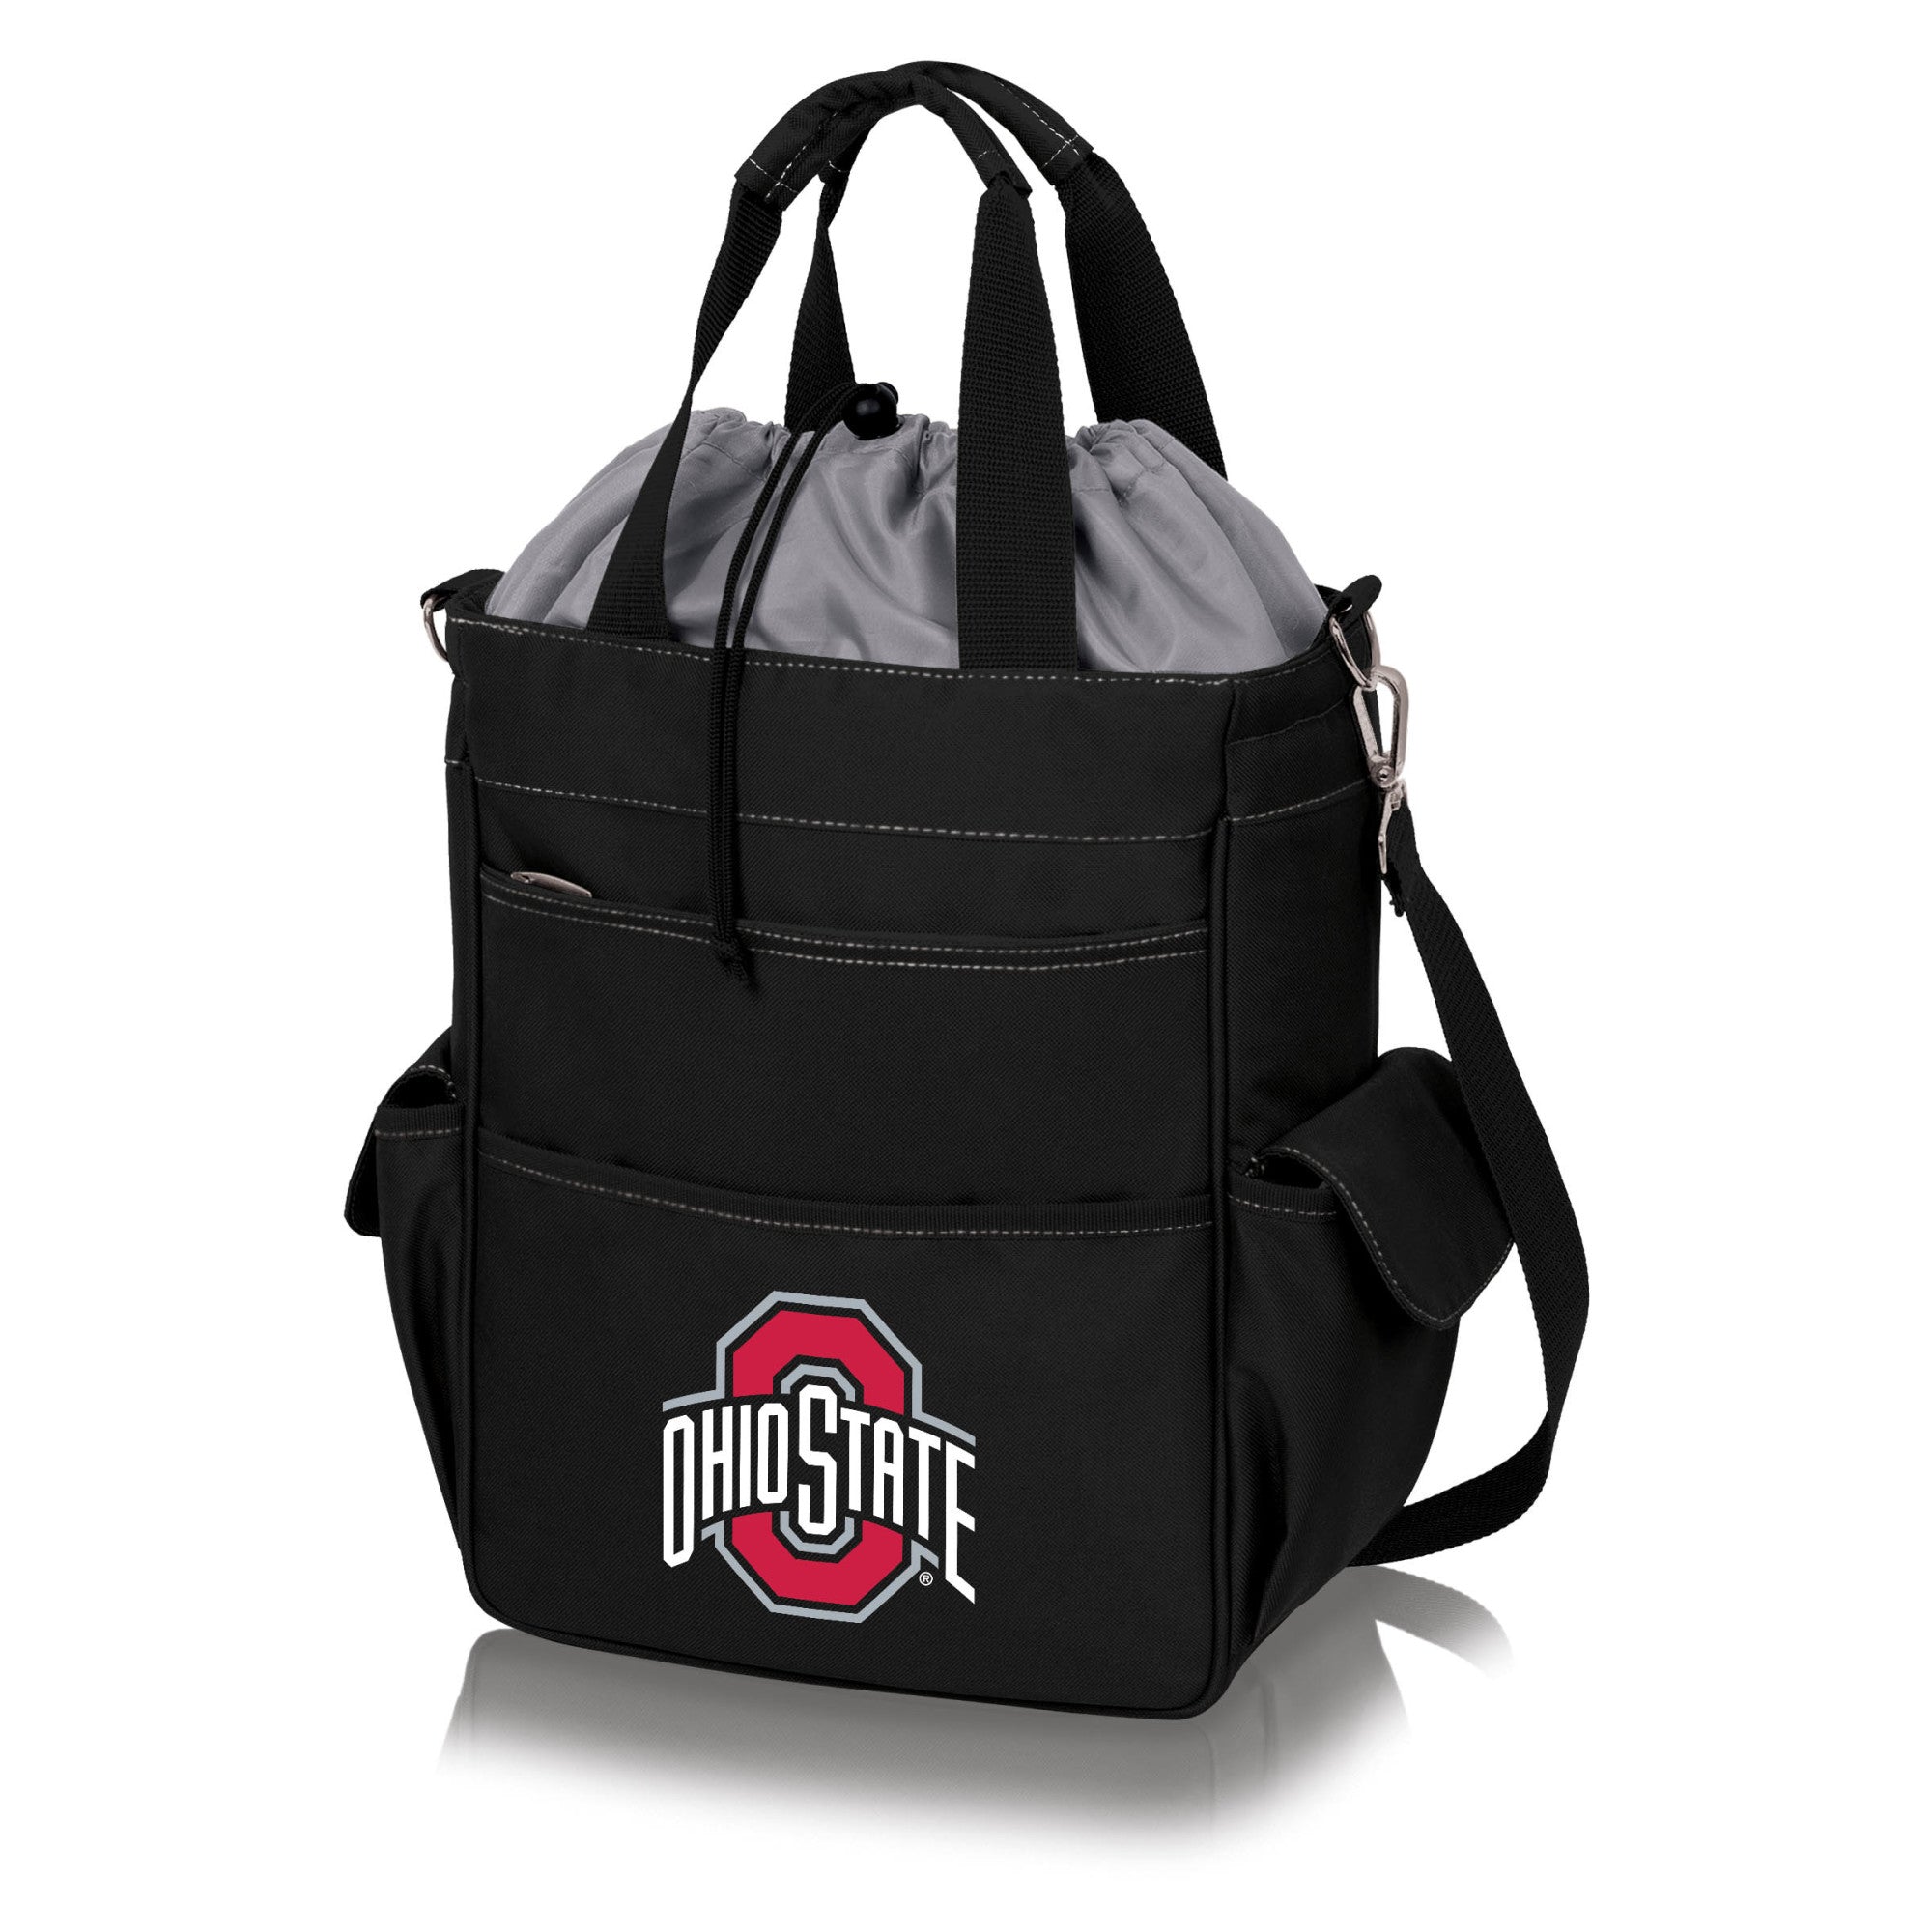 Ohio State Buckeyes - Activo Cooler Tote Bag